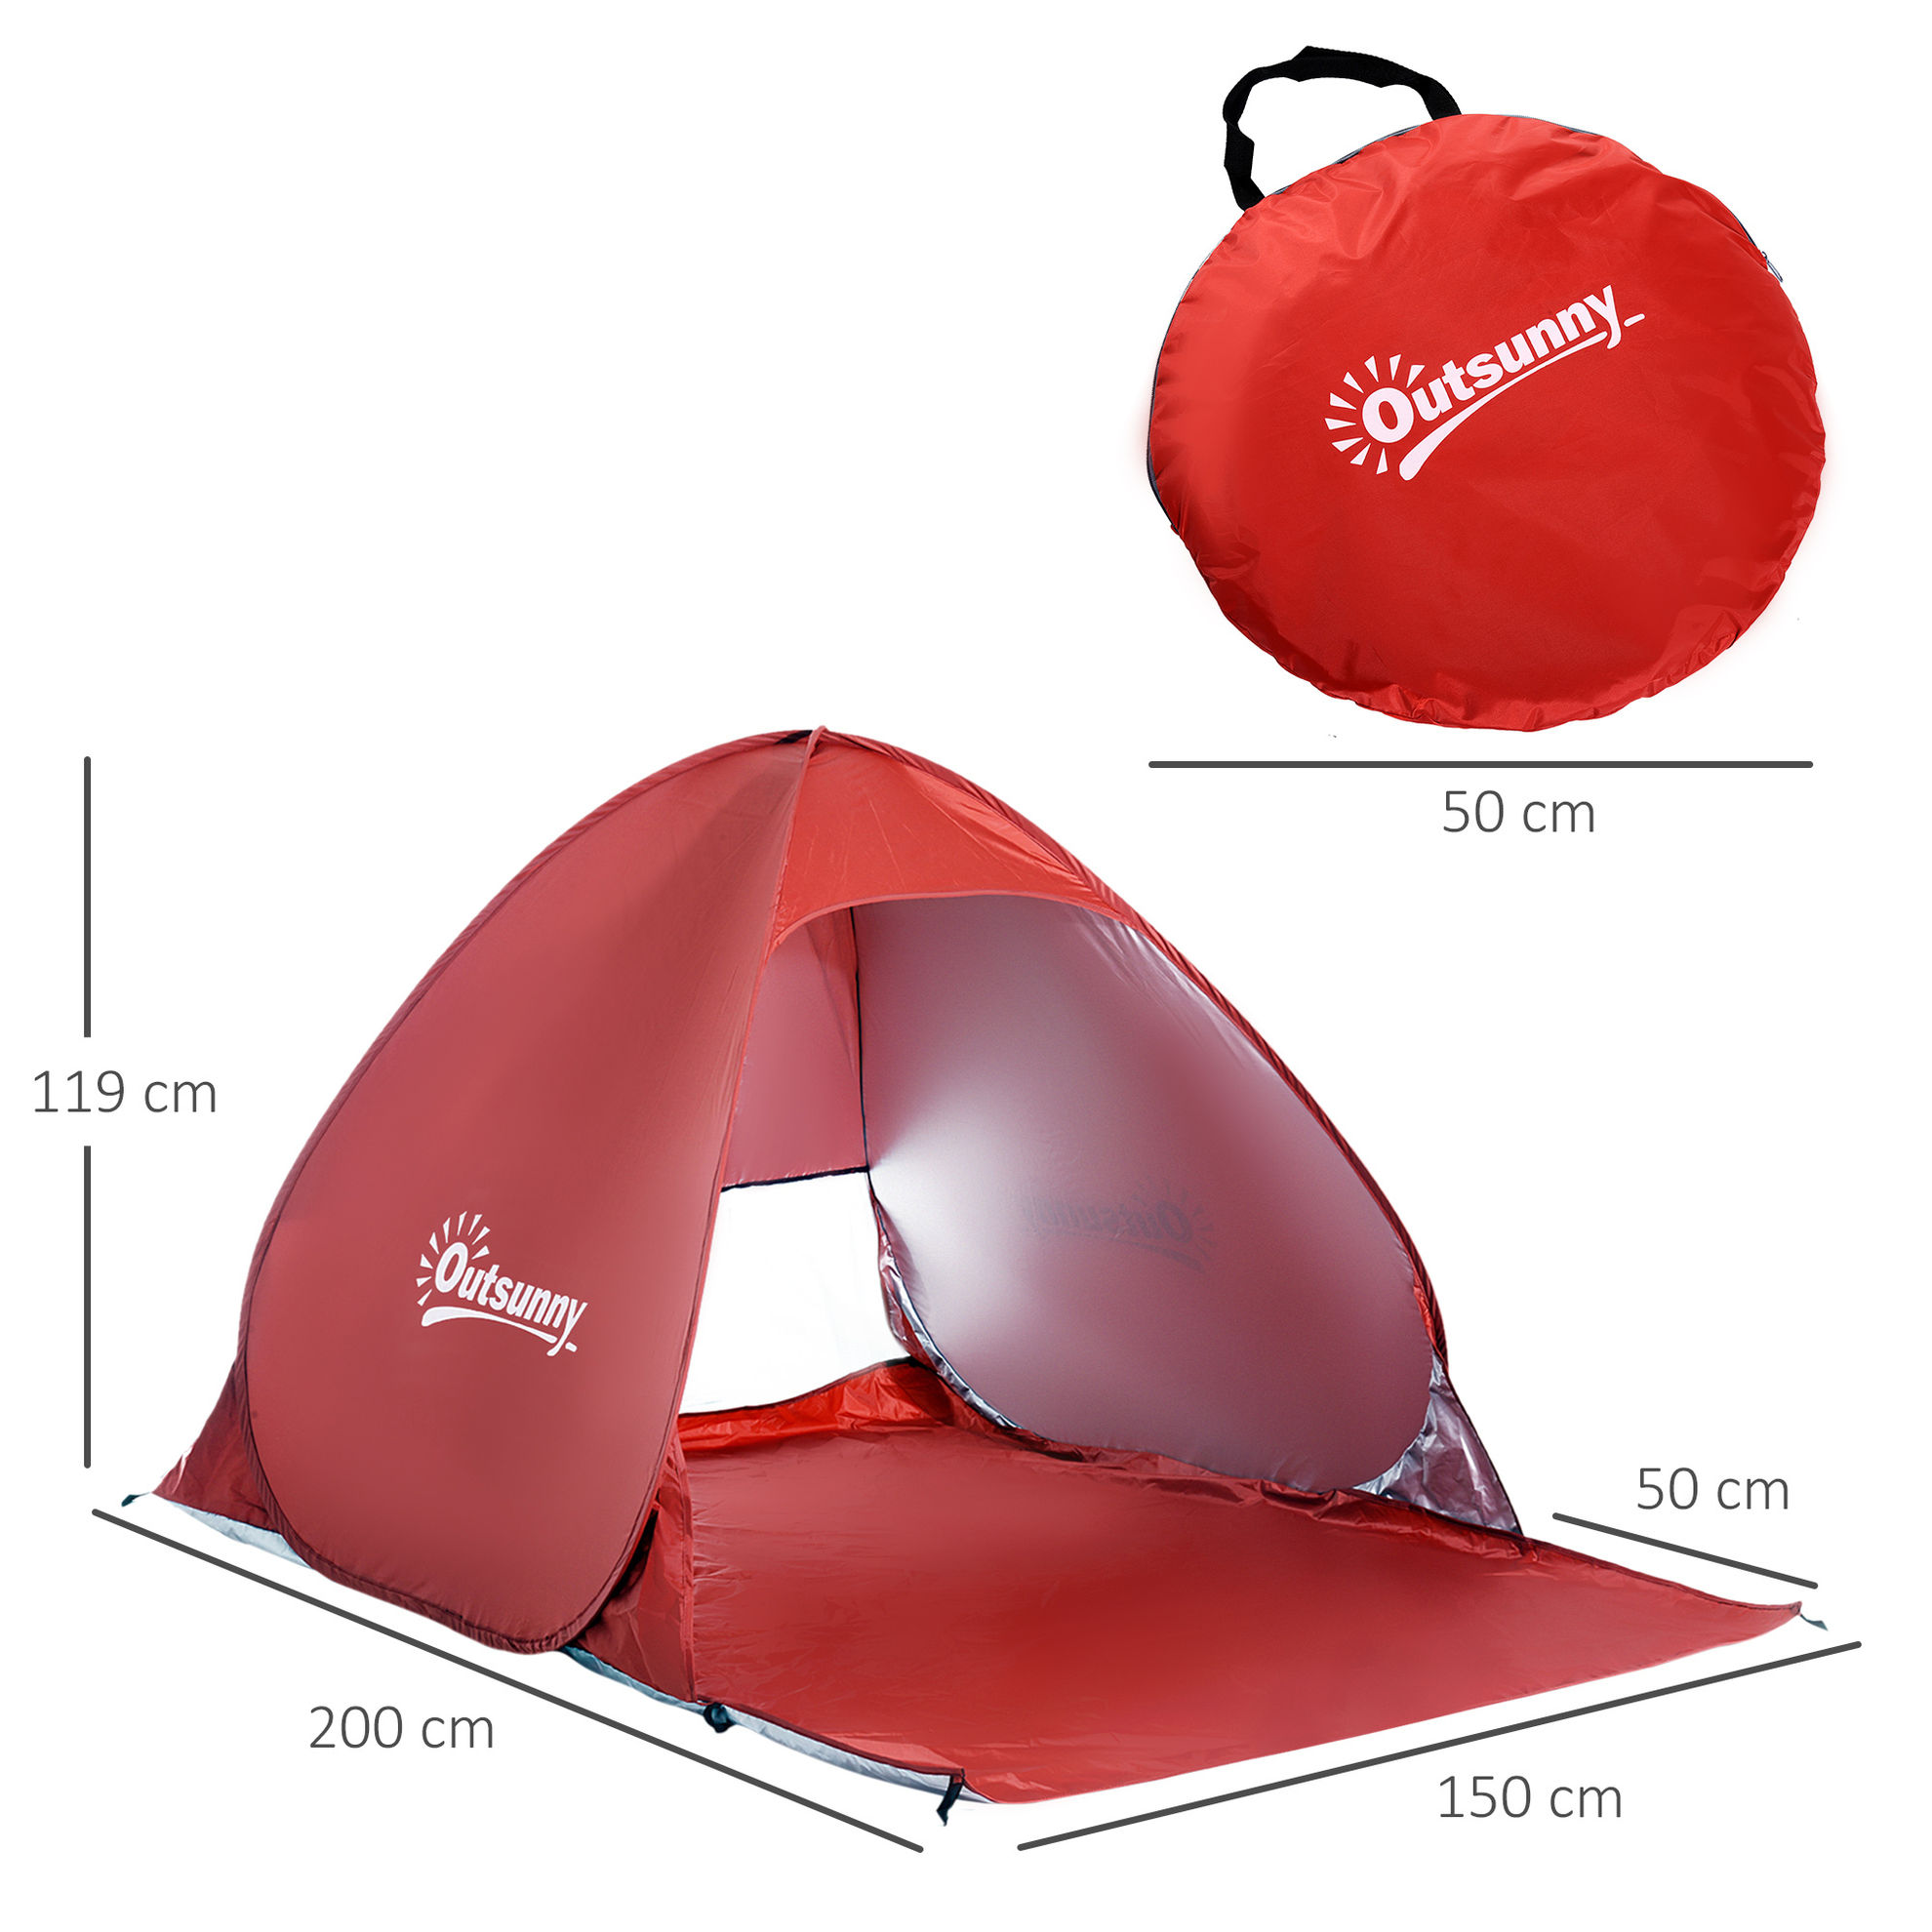 Pop-Up Zelt für 2 Personen Farbe: rot bestellen | Weltbild.de